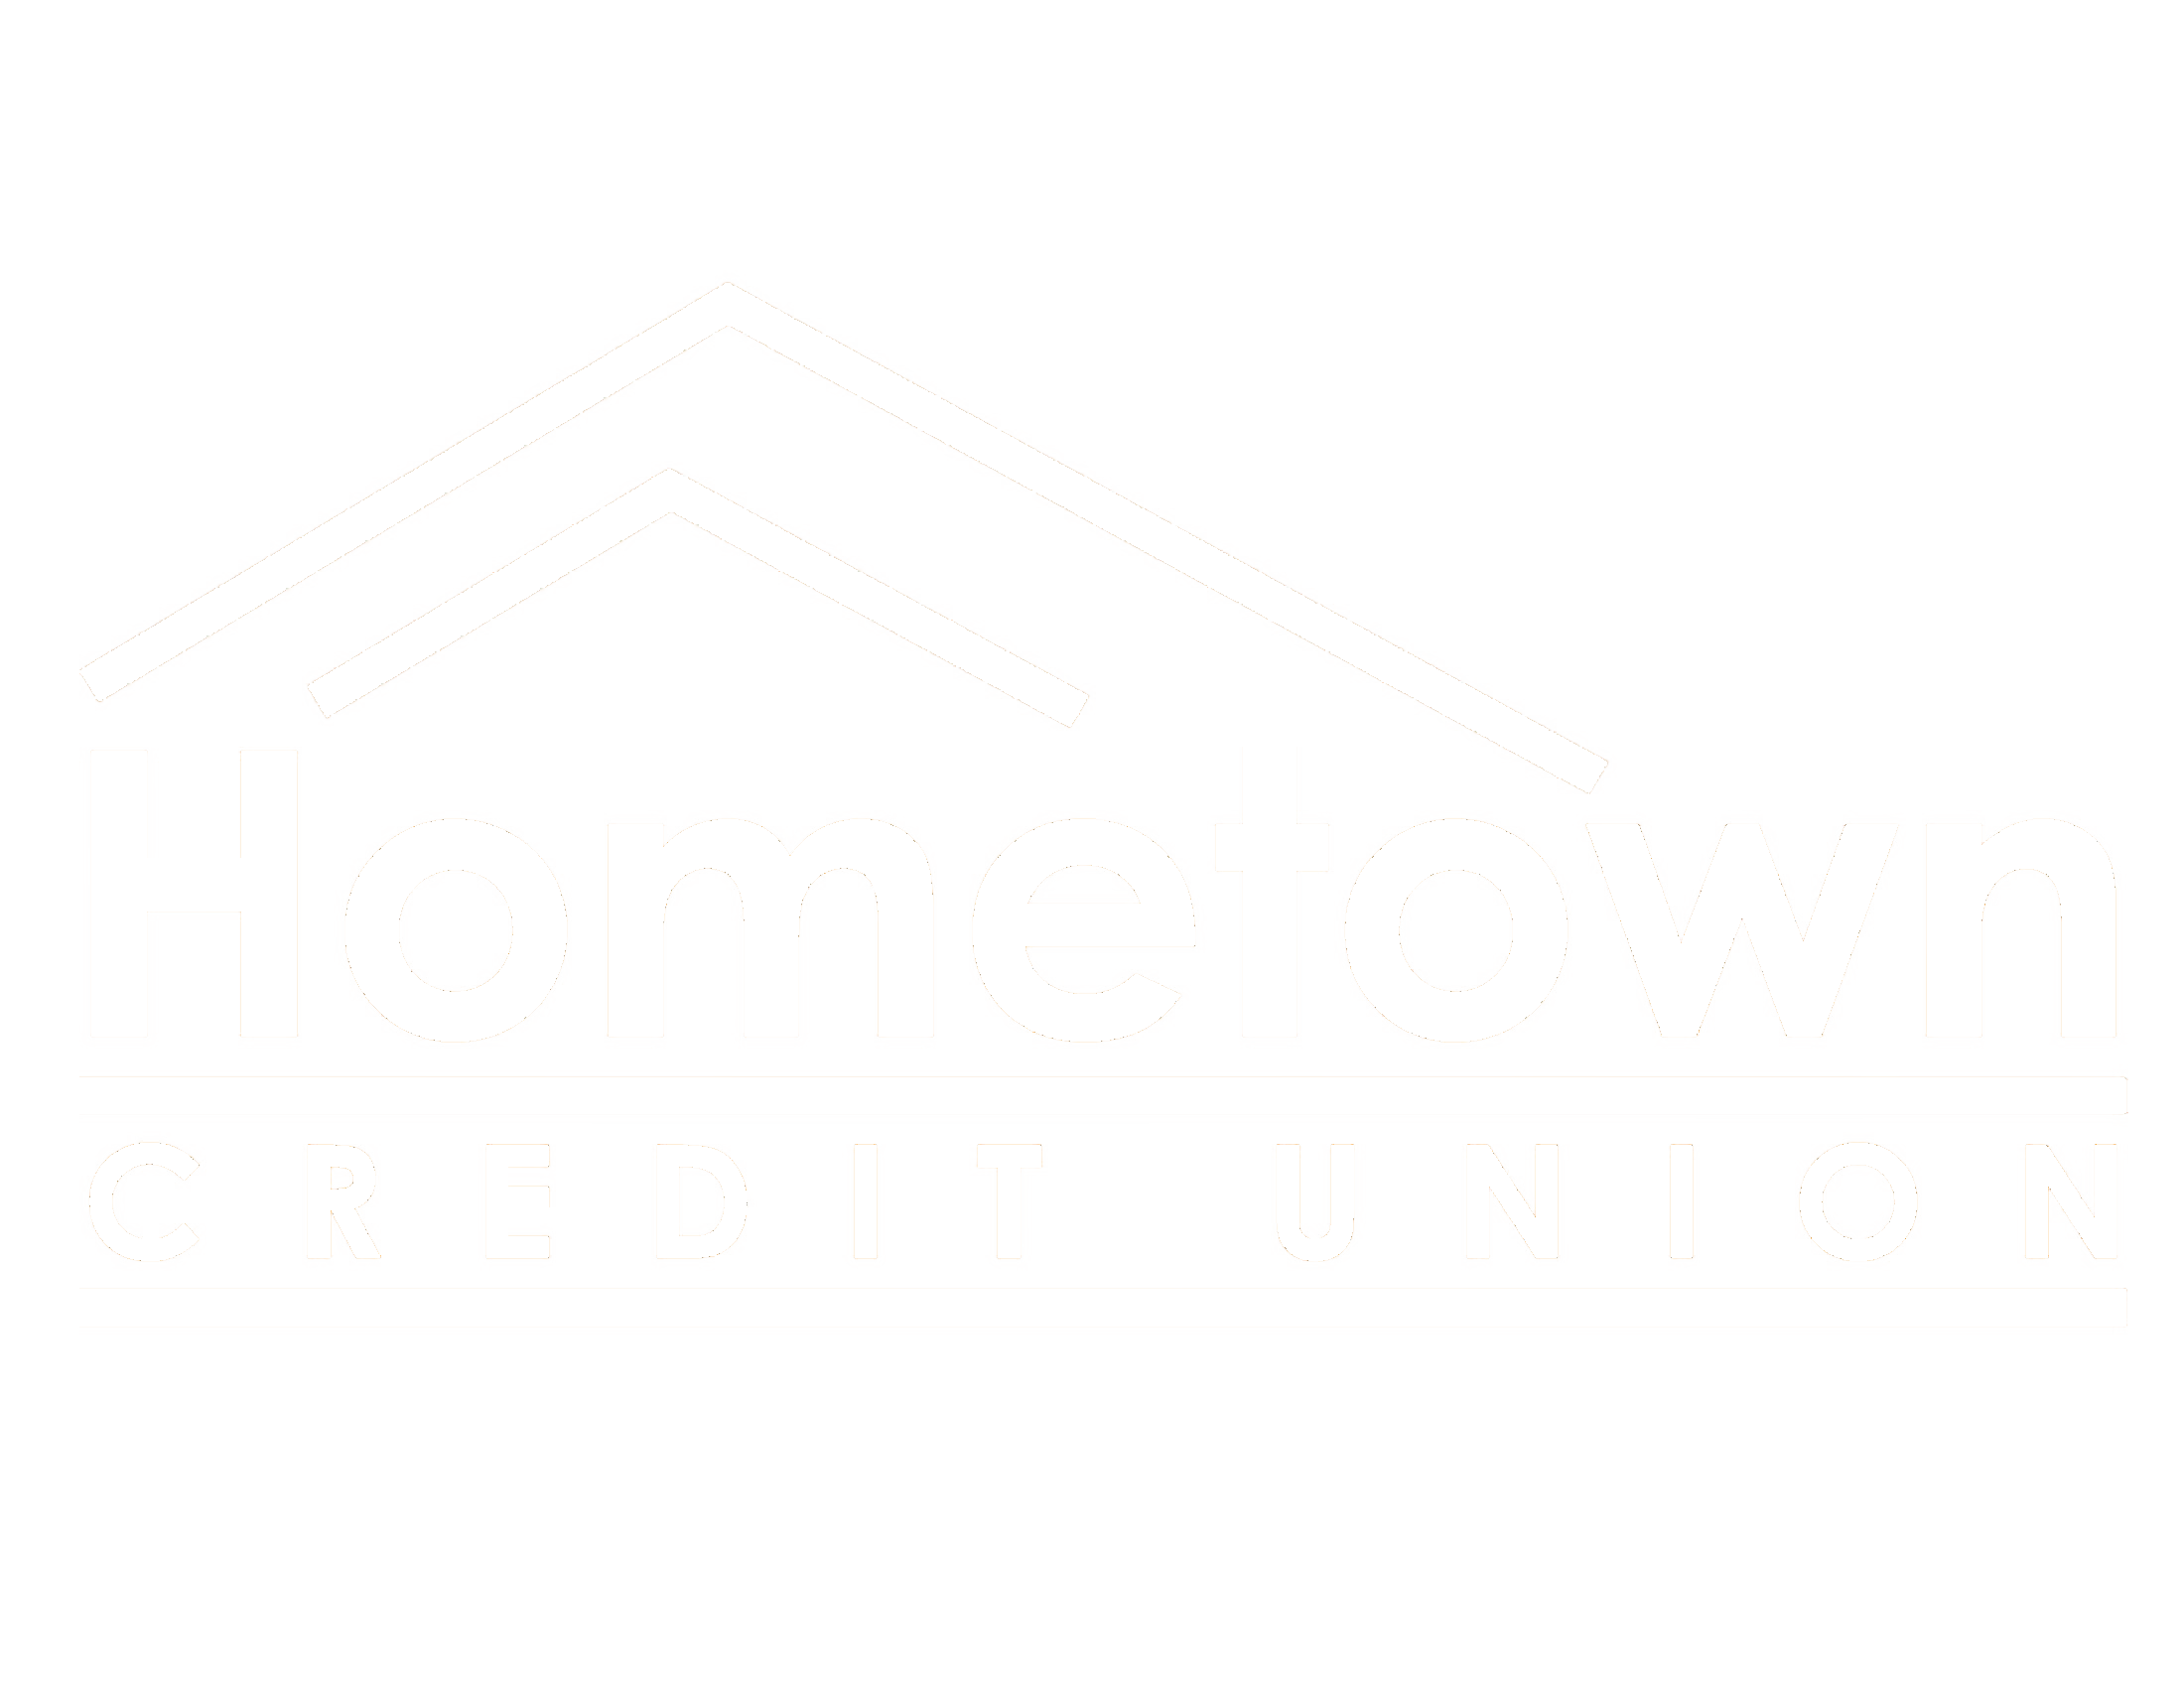 Hometown Credit Union Logo